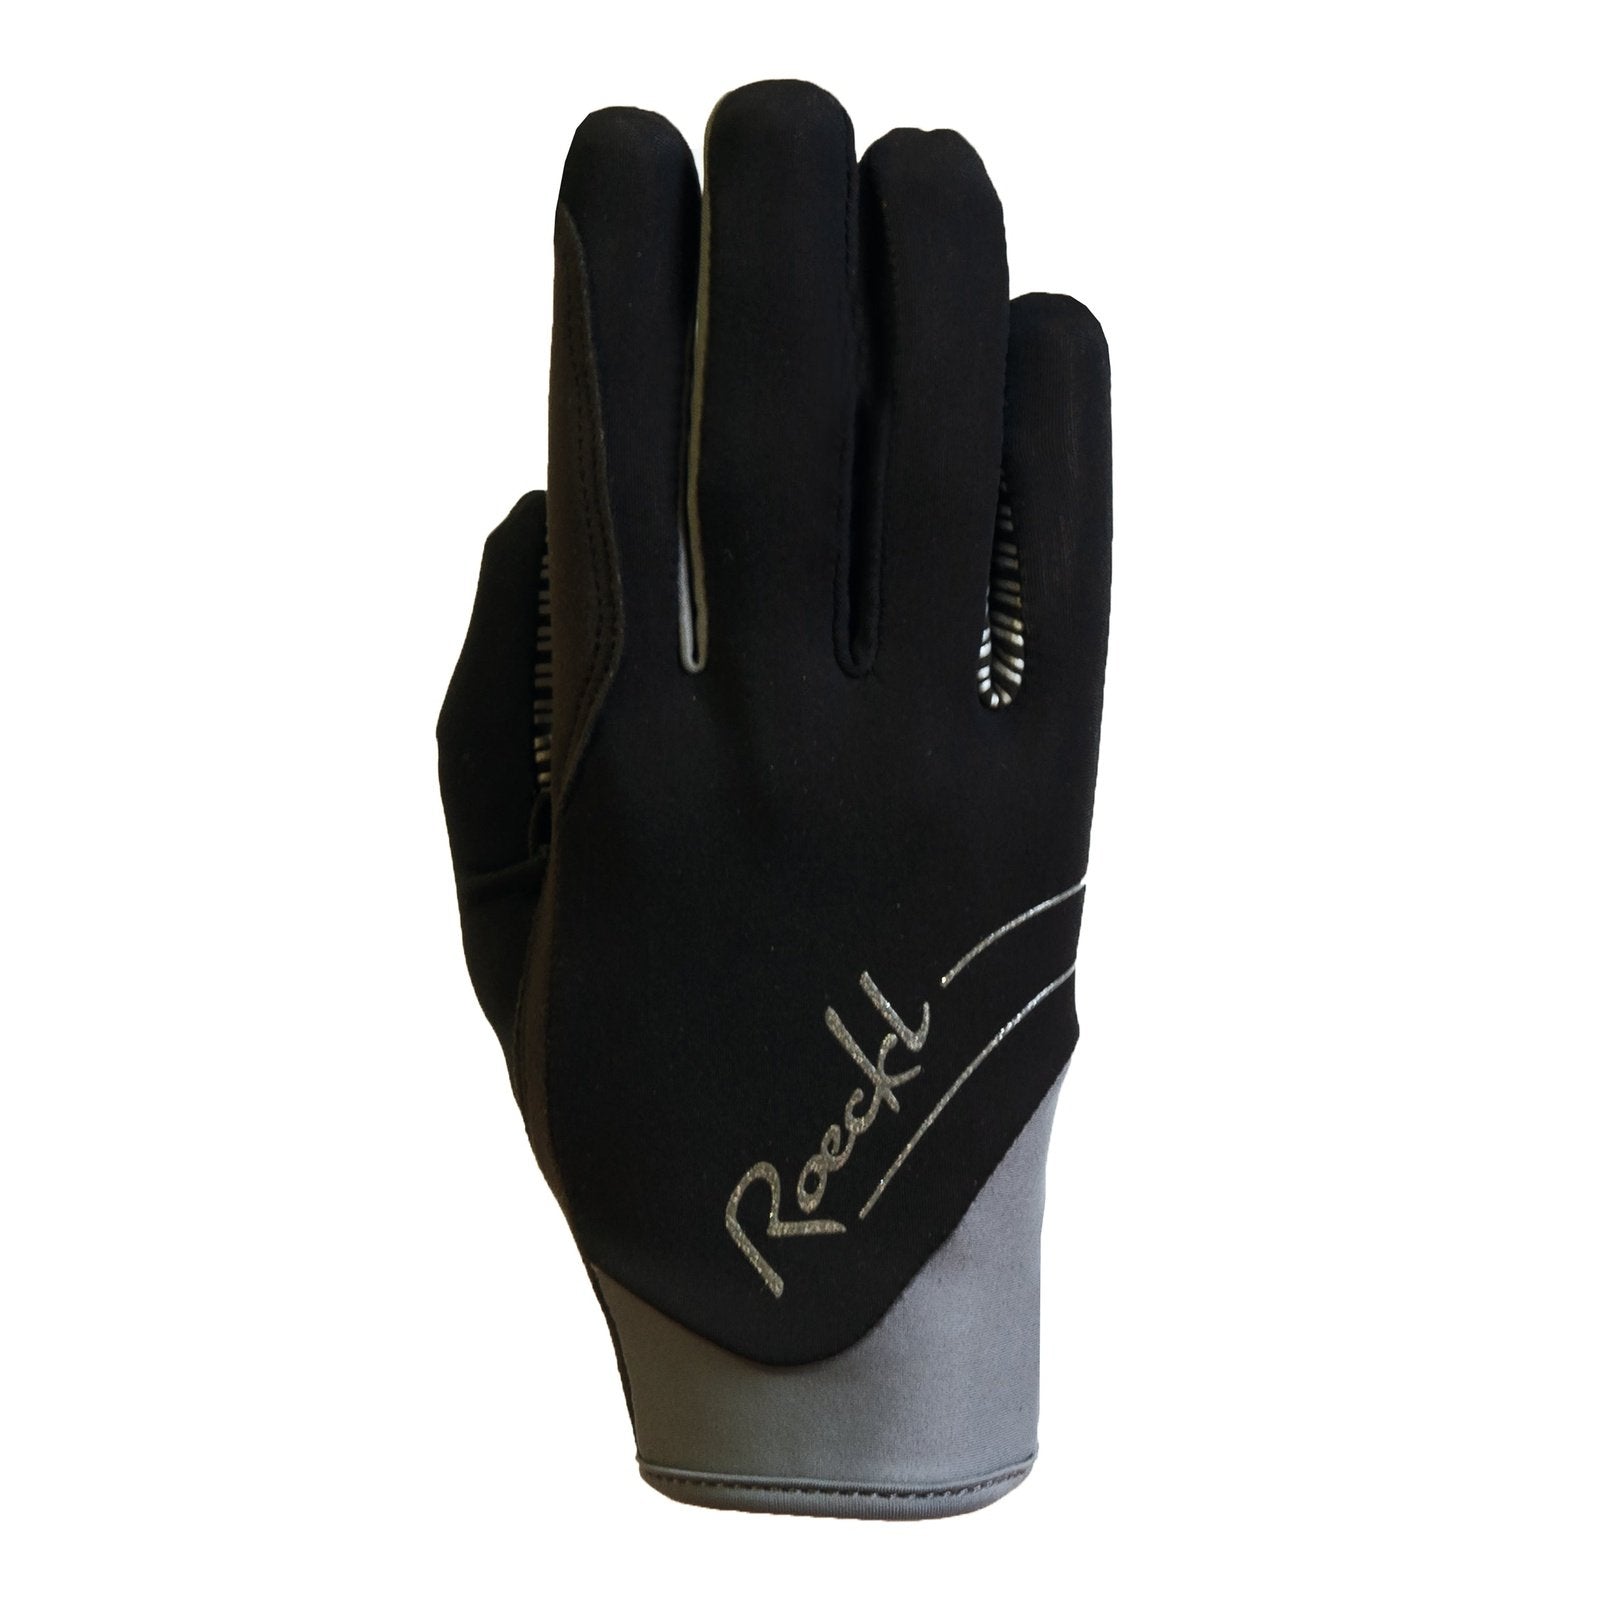 Roeckl Handschuhe June bei SP-Reitsport